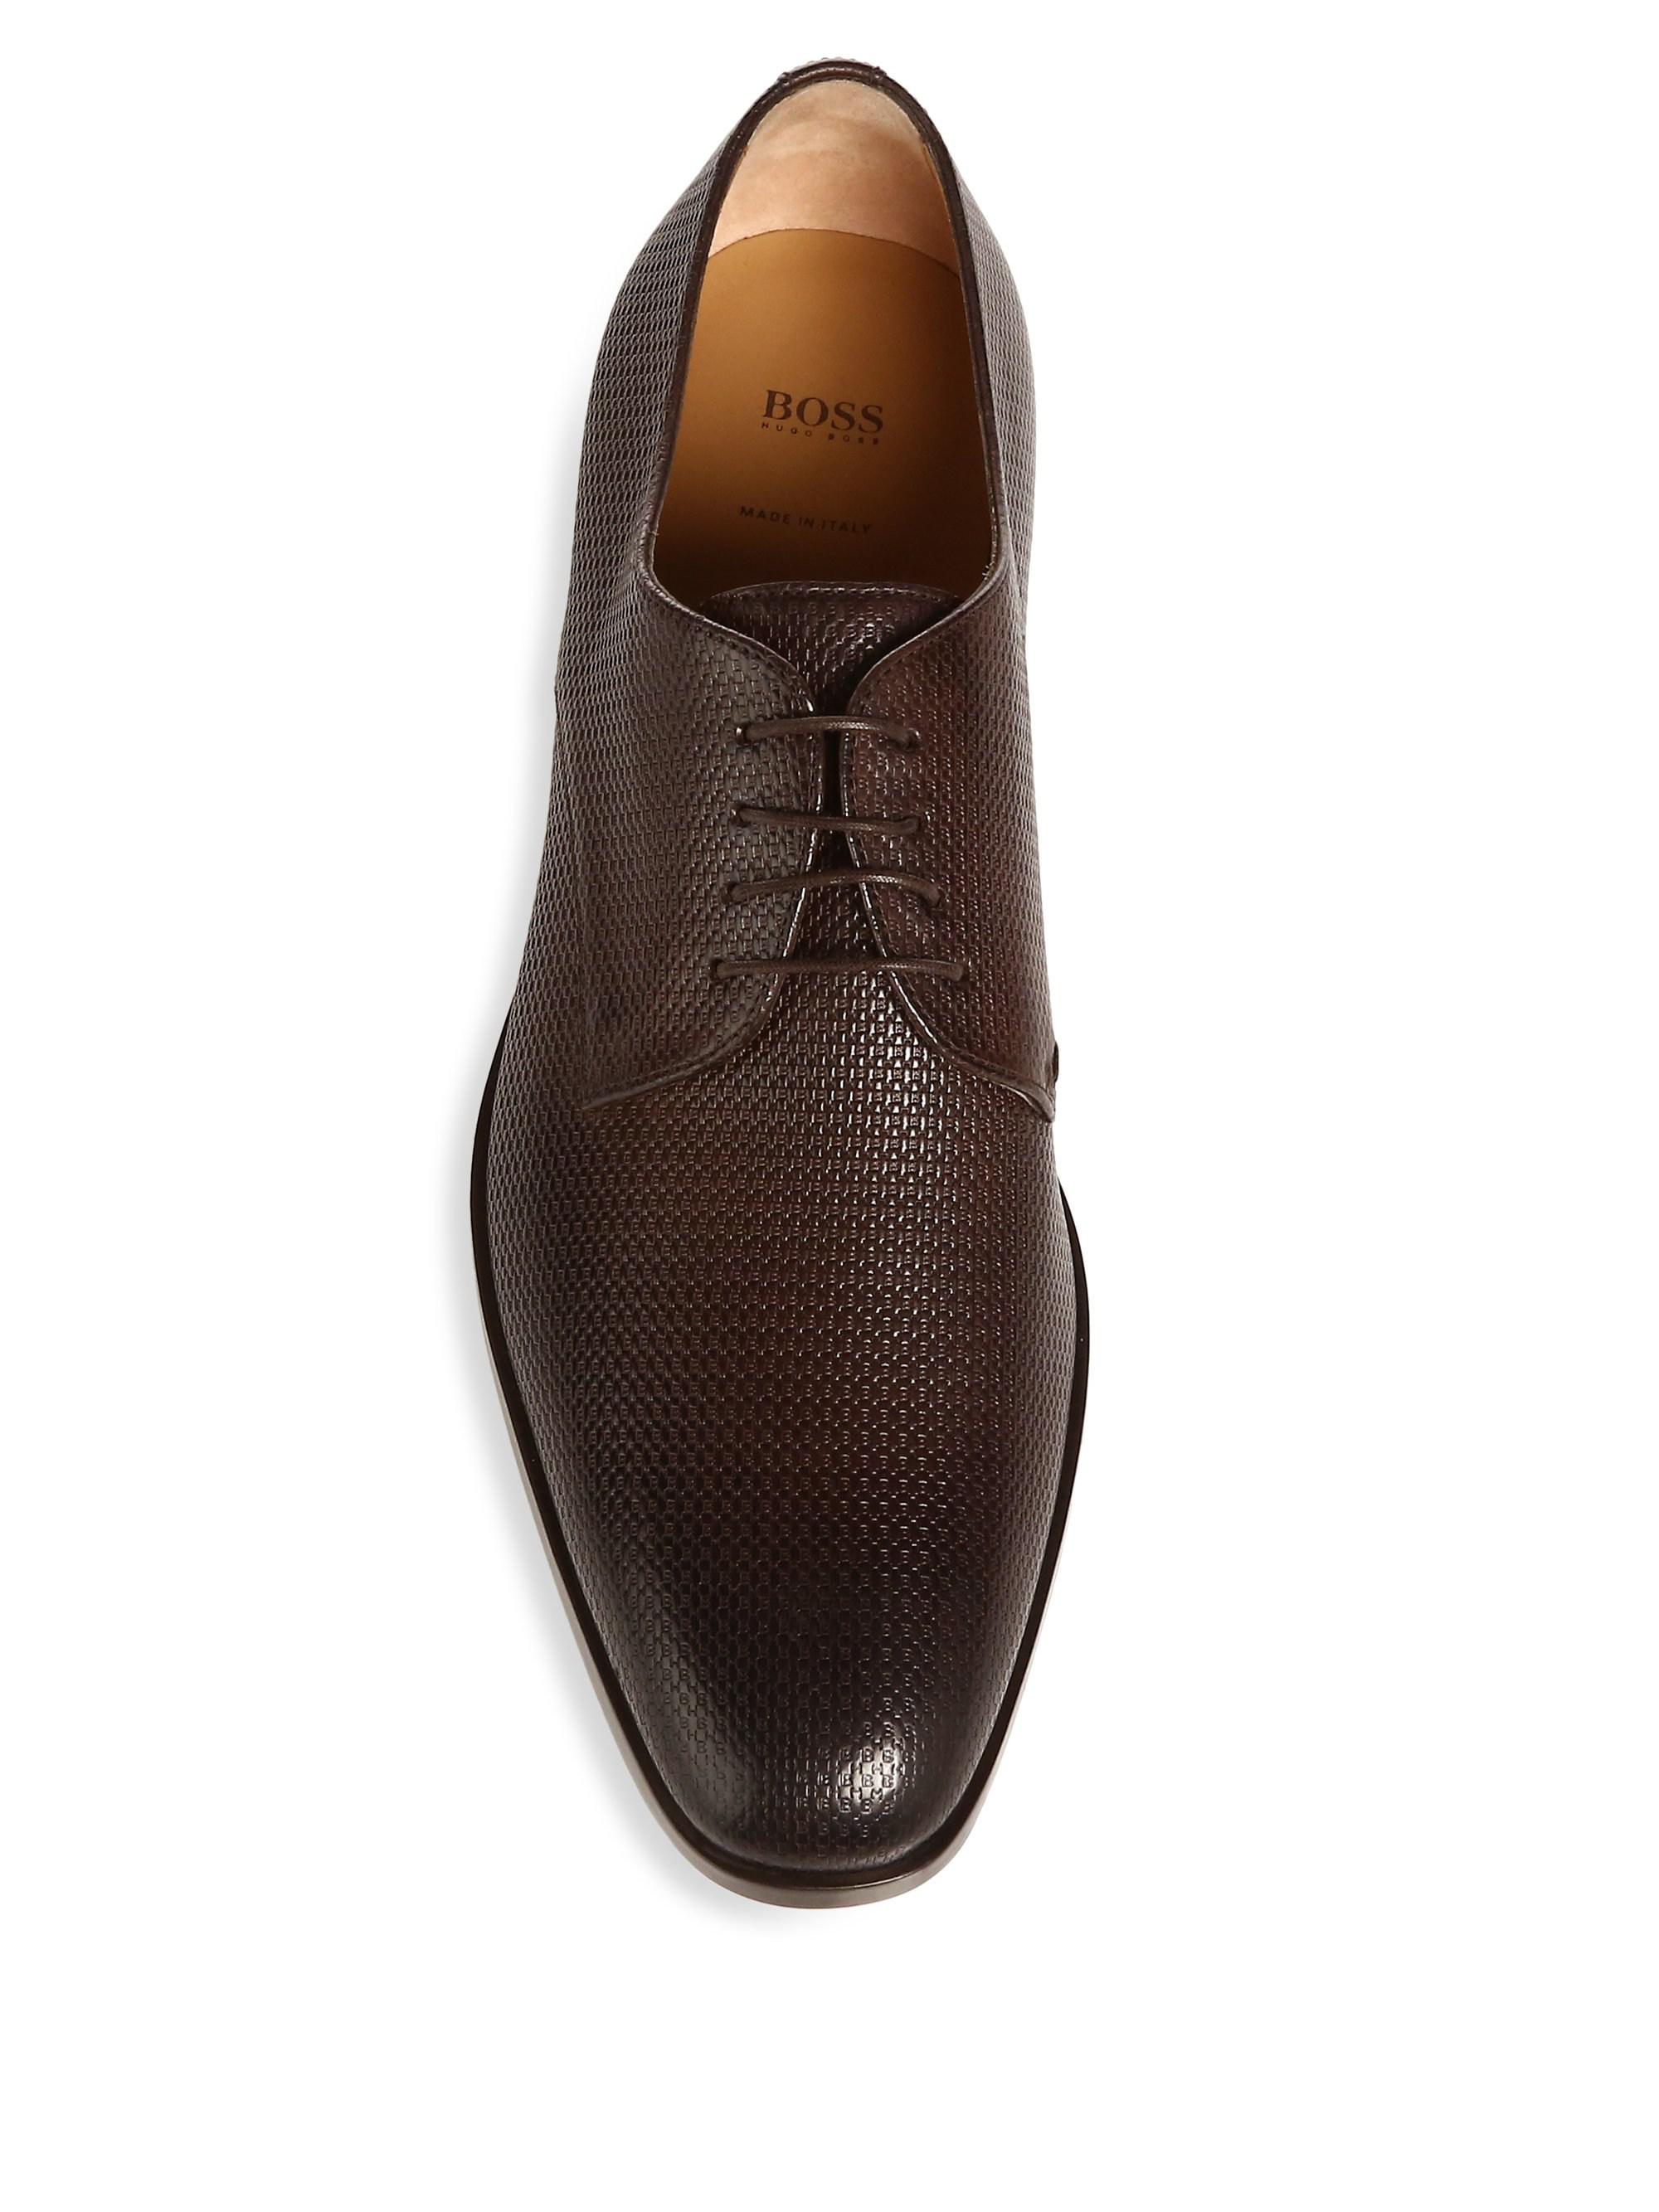 BOSS by Hugo Boss Leather Kensington Printed Derby Shoes in Dark Brown  (Brown) for Men - Lyst